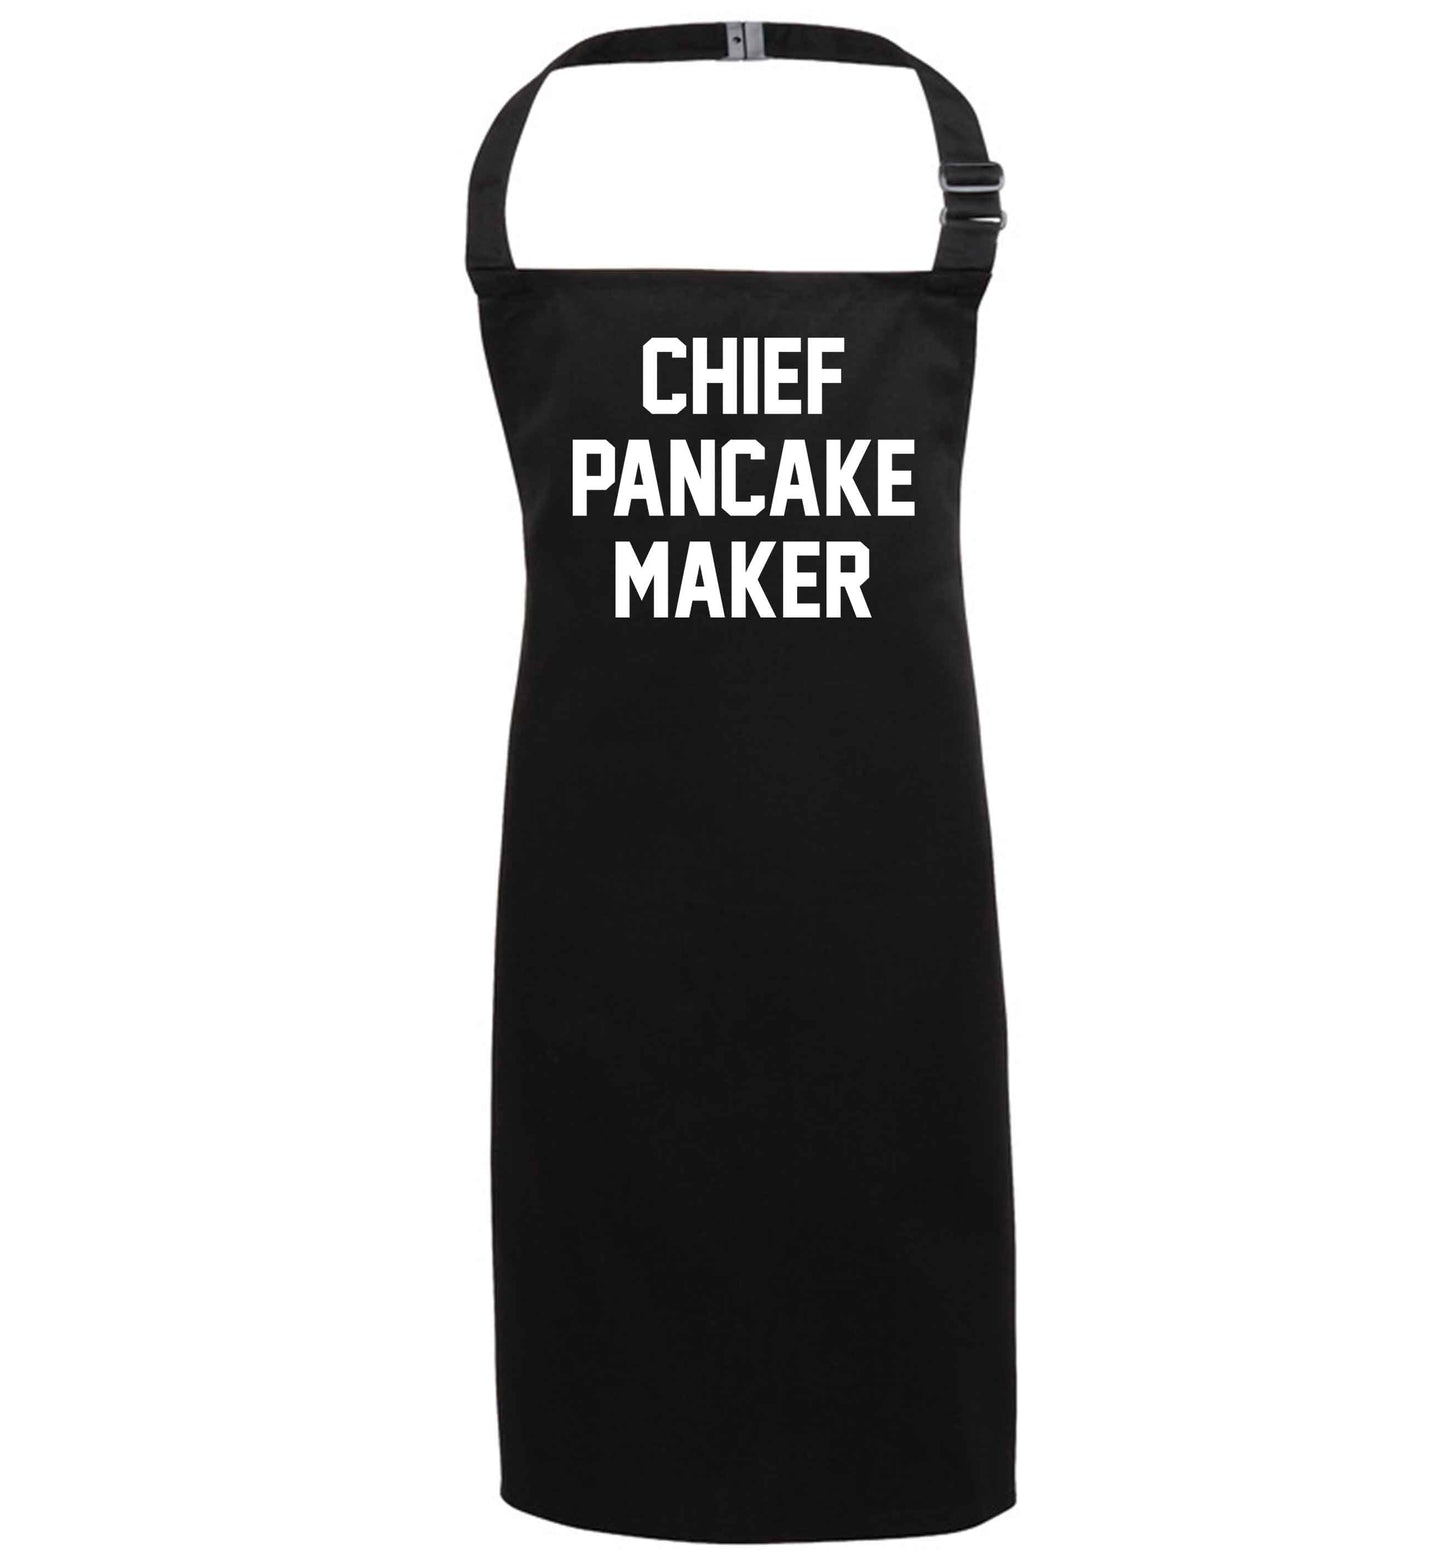 Chief pancake maker black apron 7-10 years